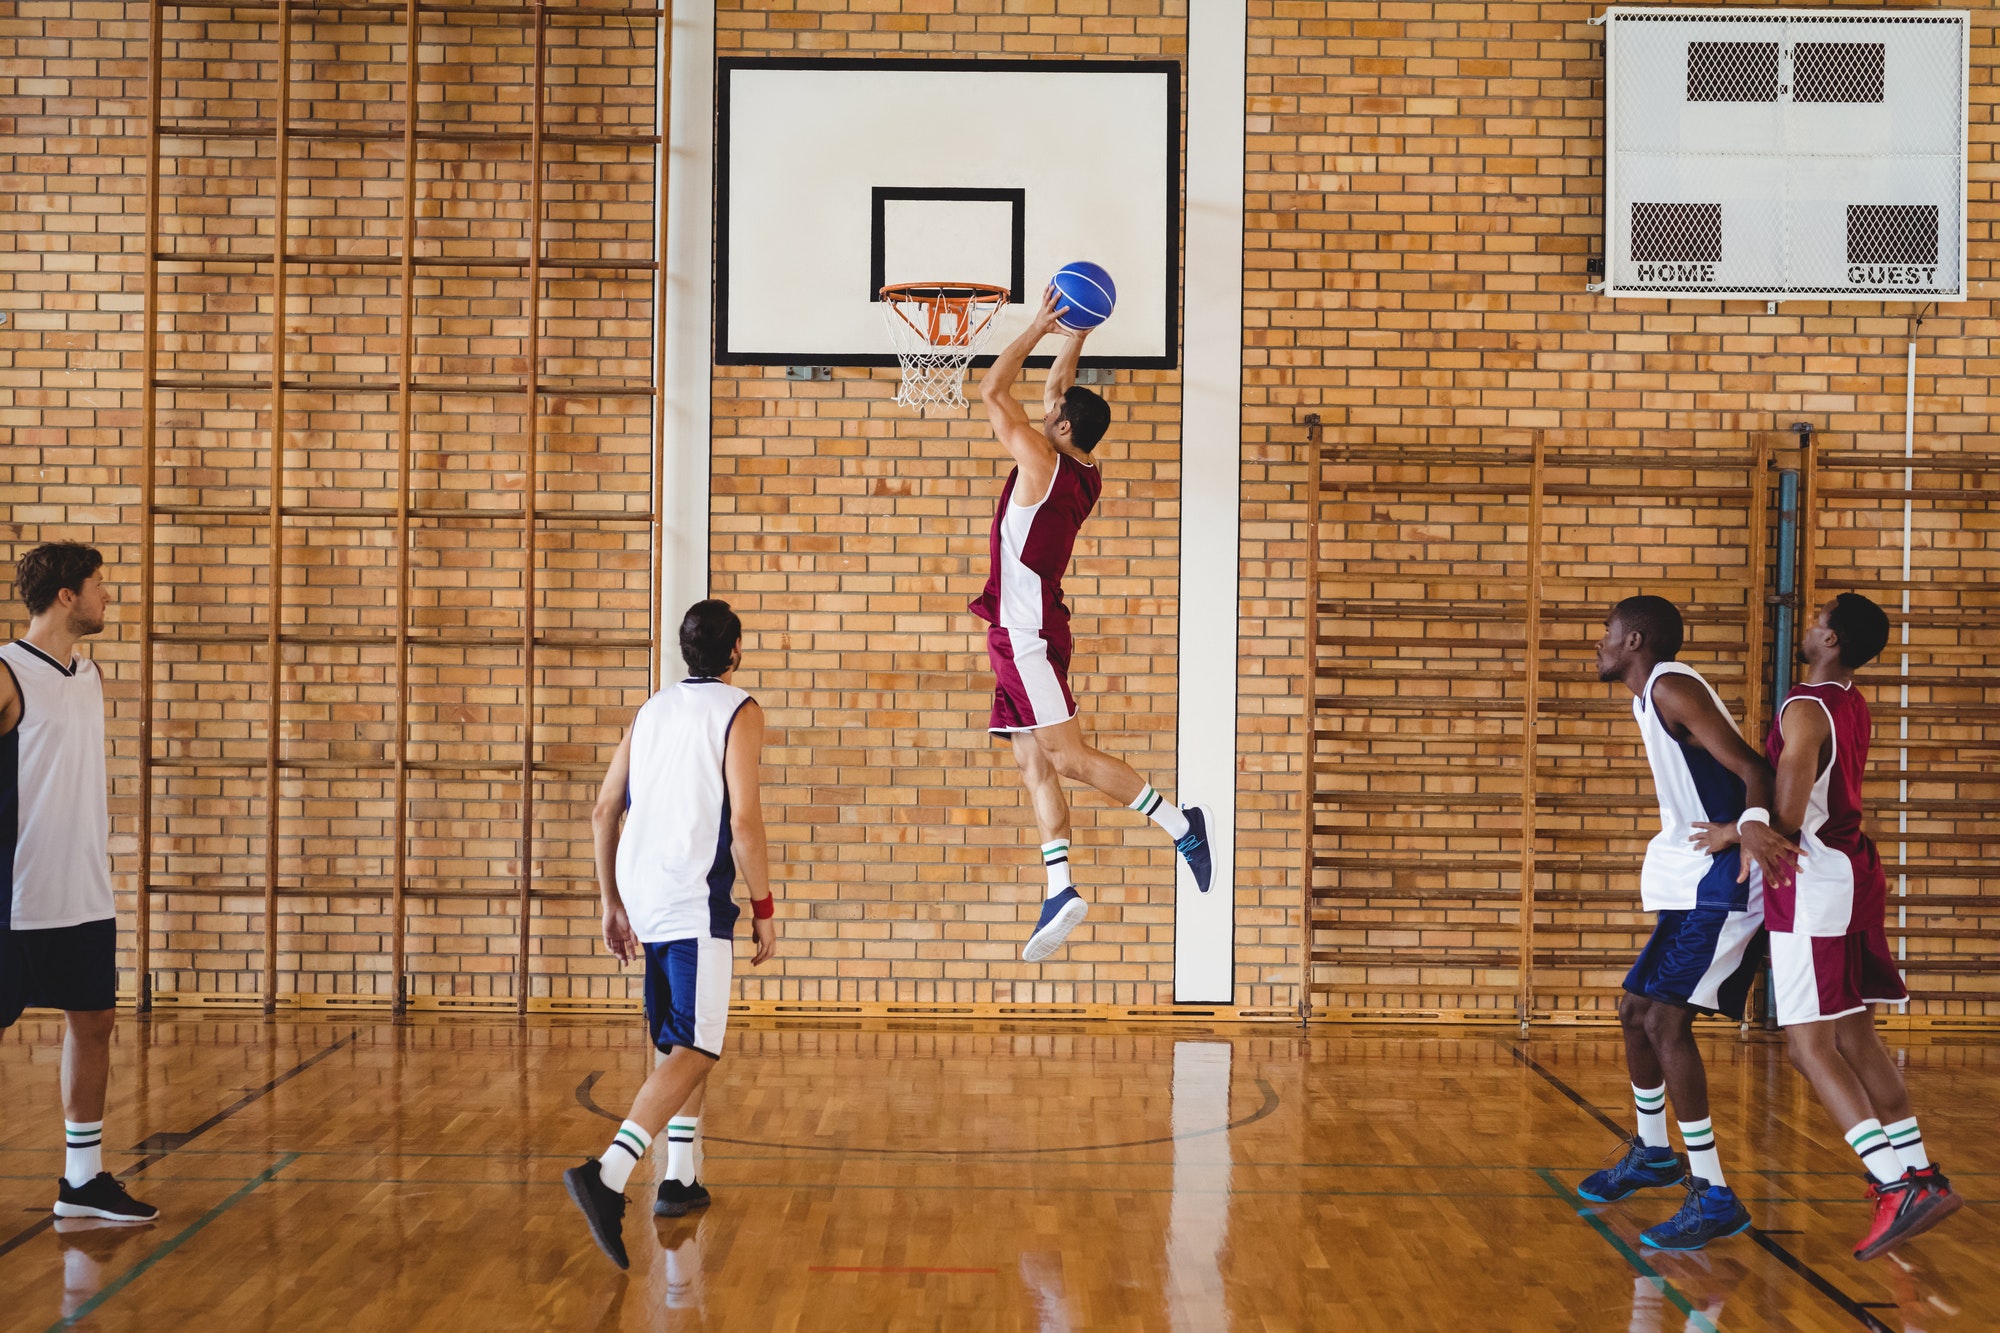 How to Teach Your Child Fundamental Basketball Skills